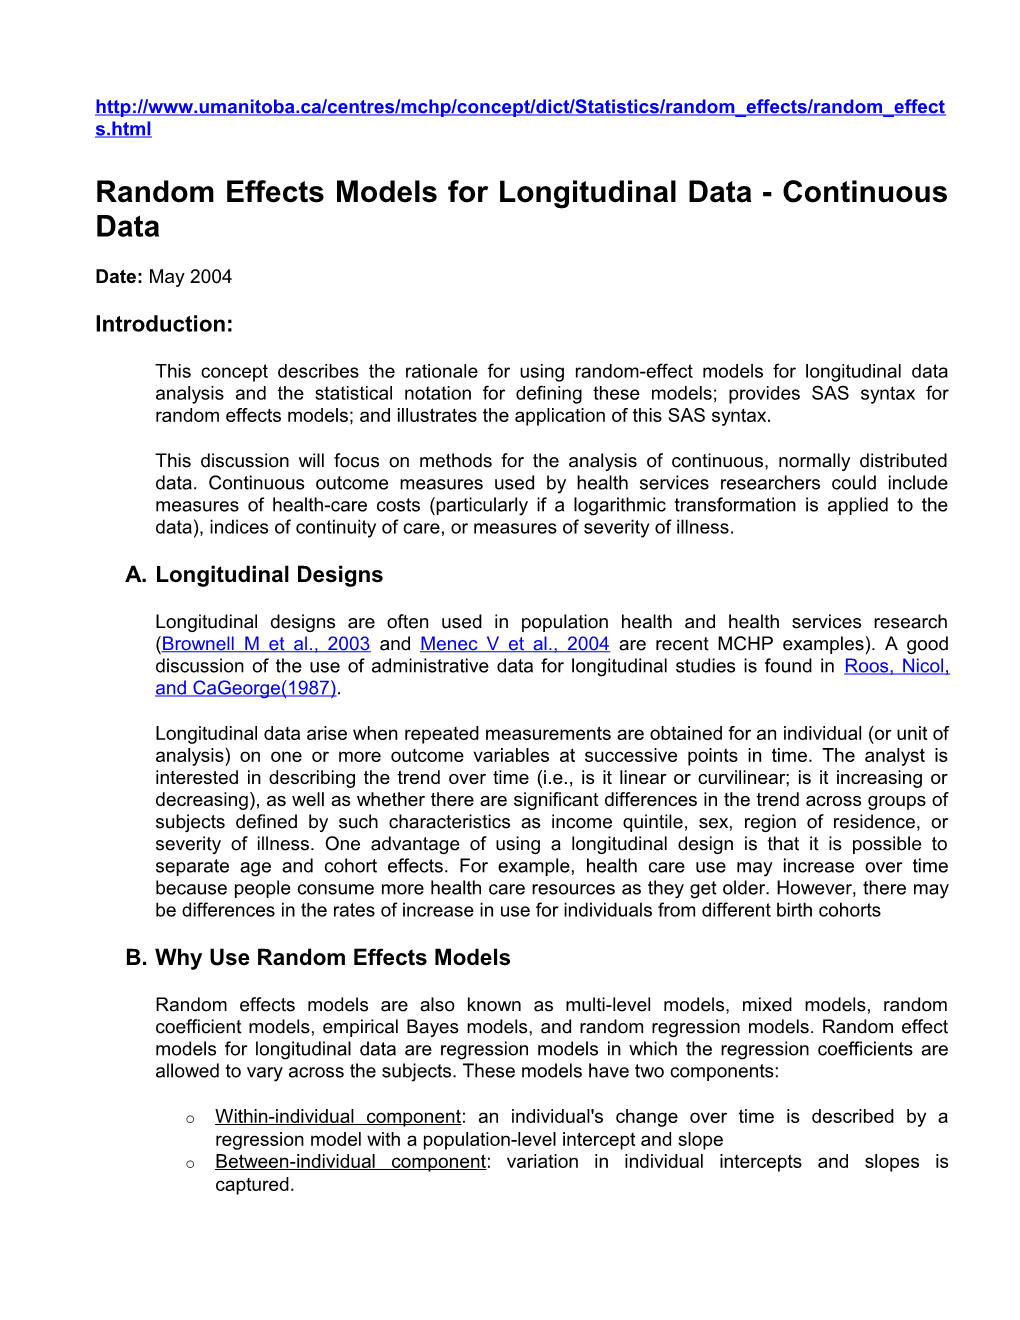 Random Effects Models for Longitudinal Data - Continuous Data